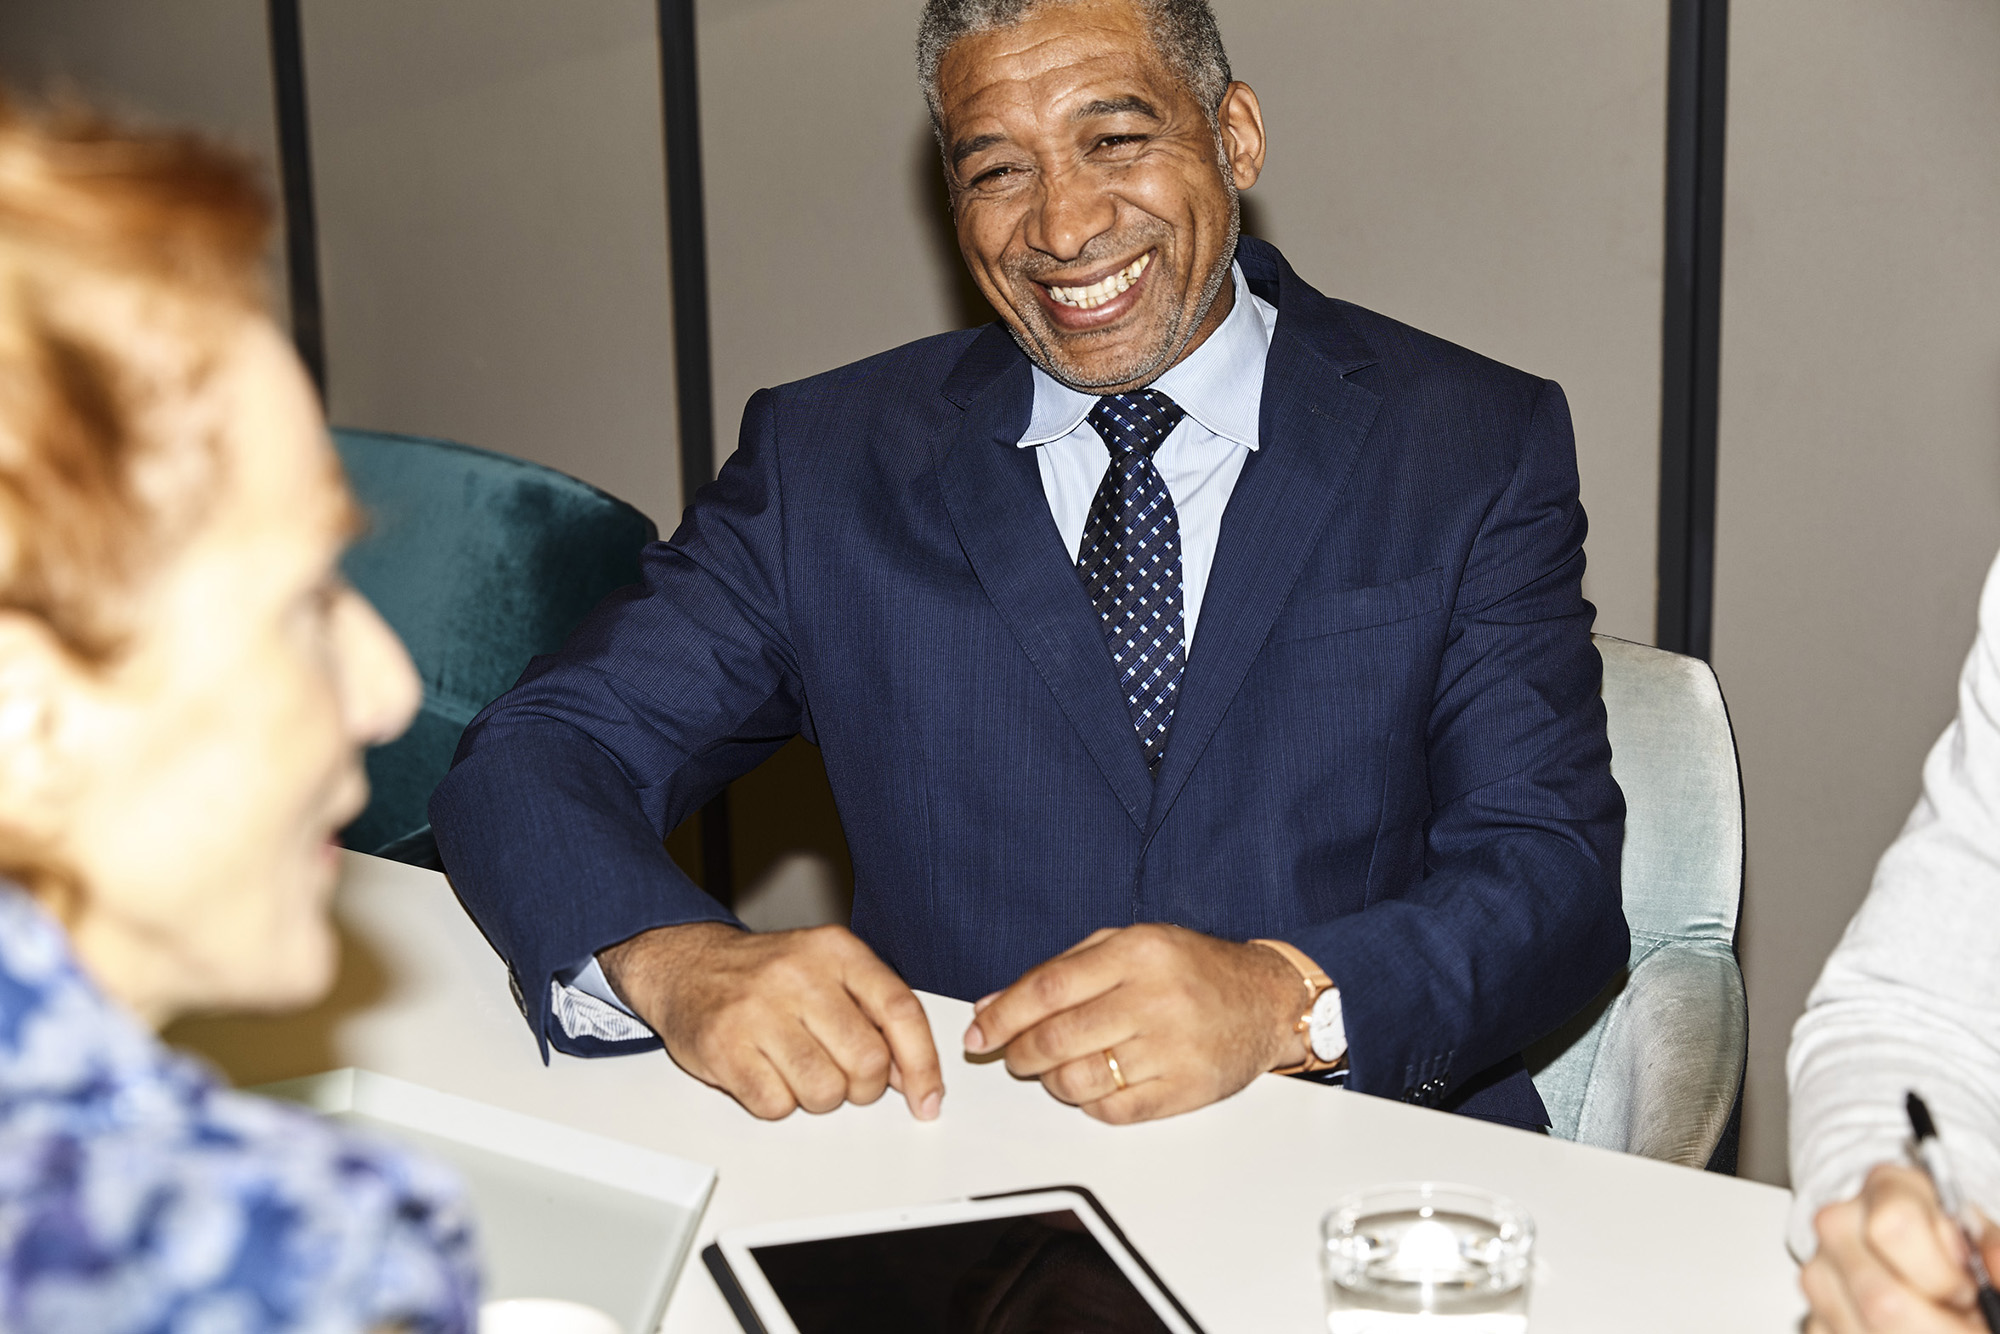 En leende äldre man i kostym vid konferensbord.